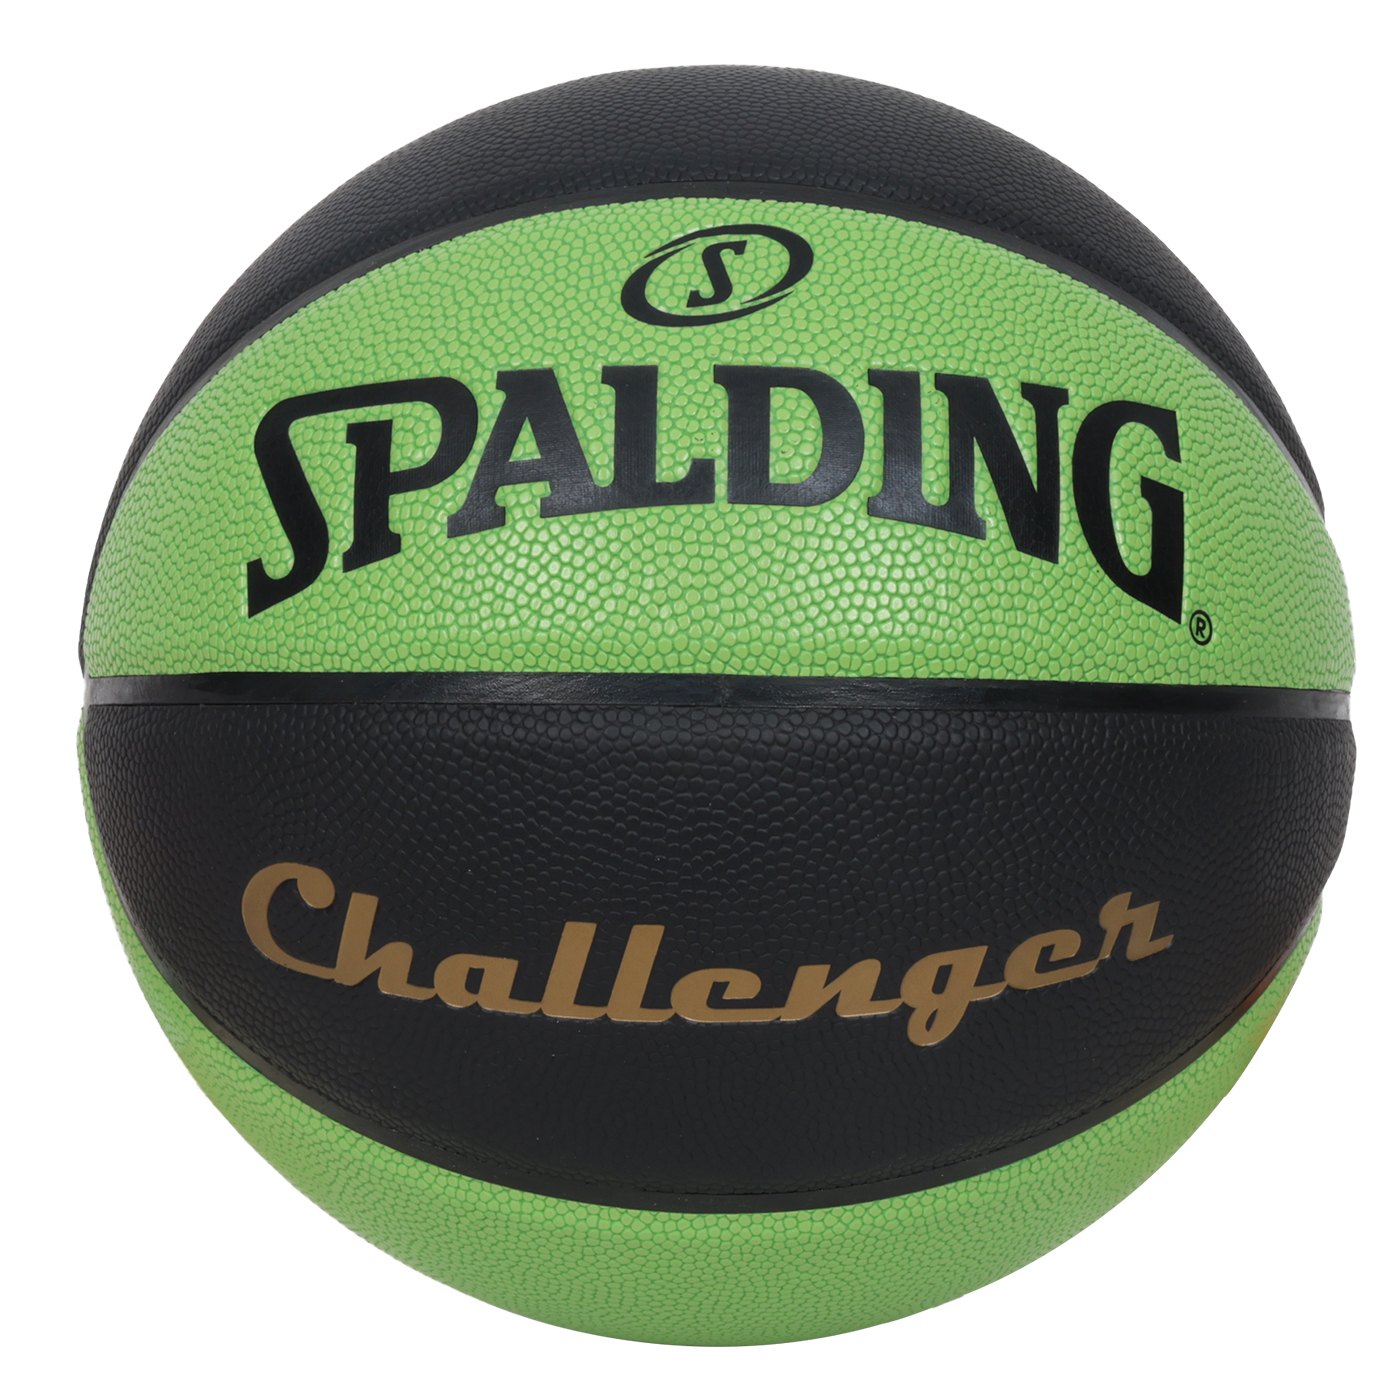 SPALDING Challenger系列#7合成皮籃球  SPB1132B7